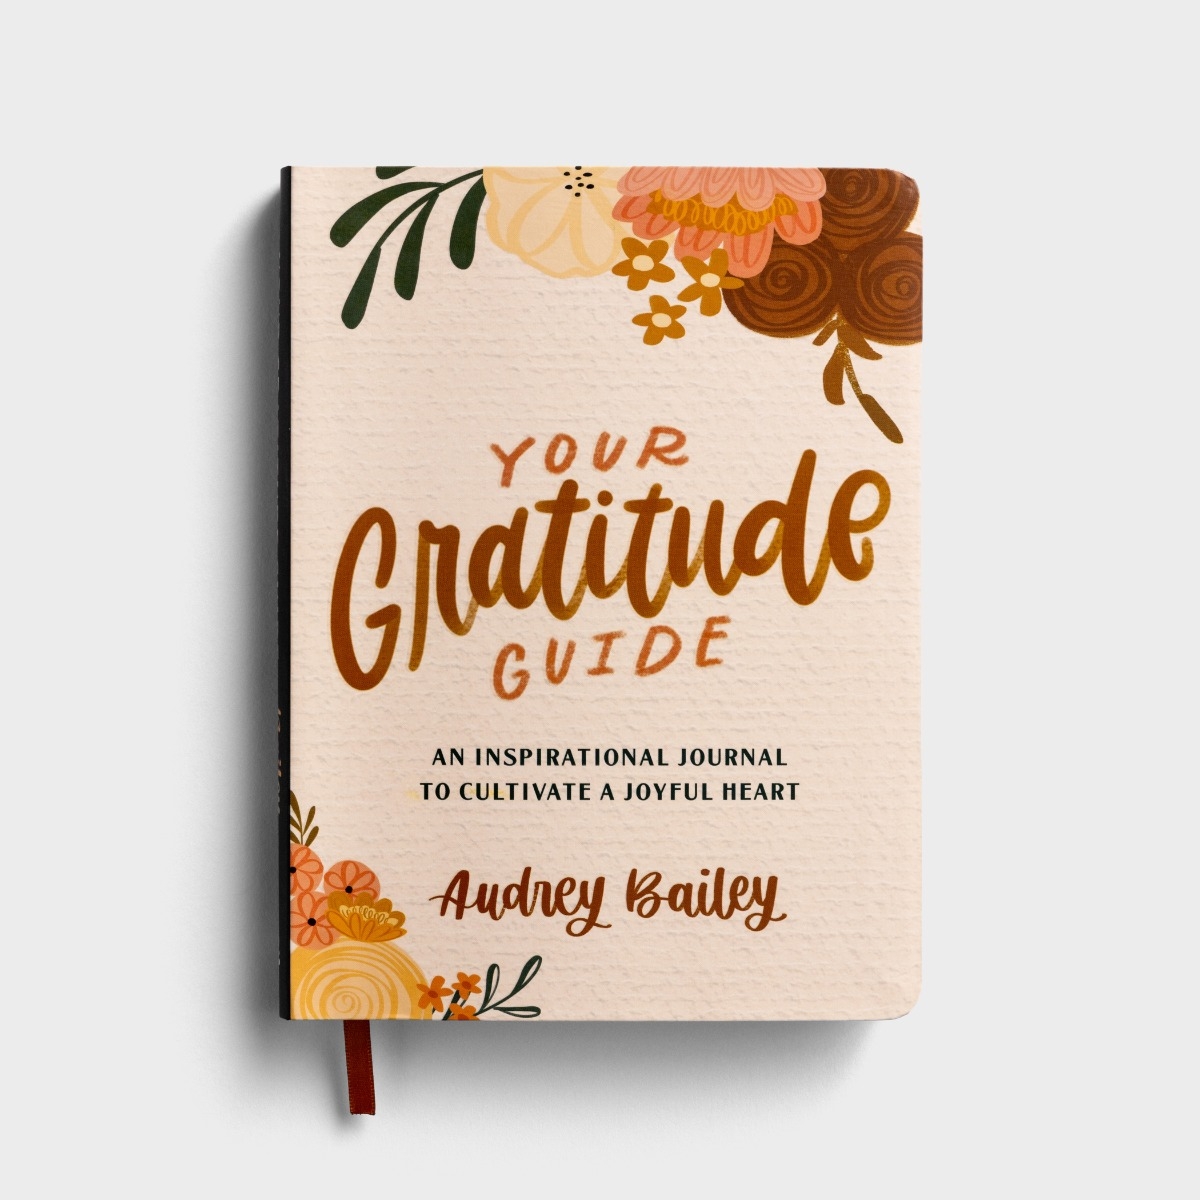 Audrey Bailey - Your Gratitude Guide: An Inspirational Journal to Cultivate a Joyful Heart